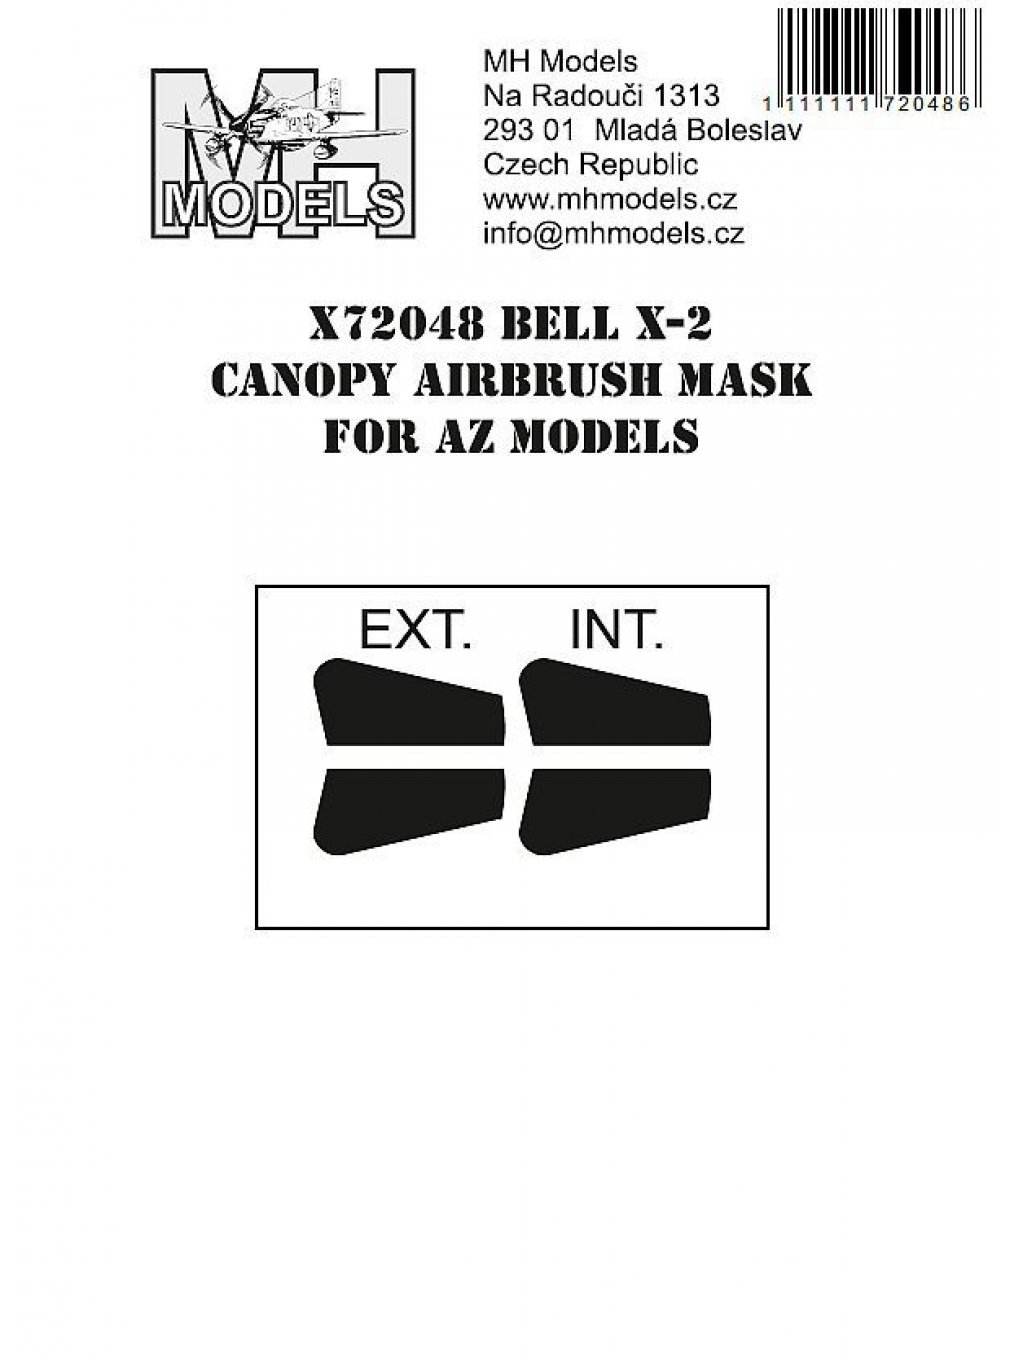 Bell X-2 canopy airbrush mask for AZ Models